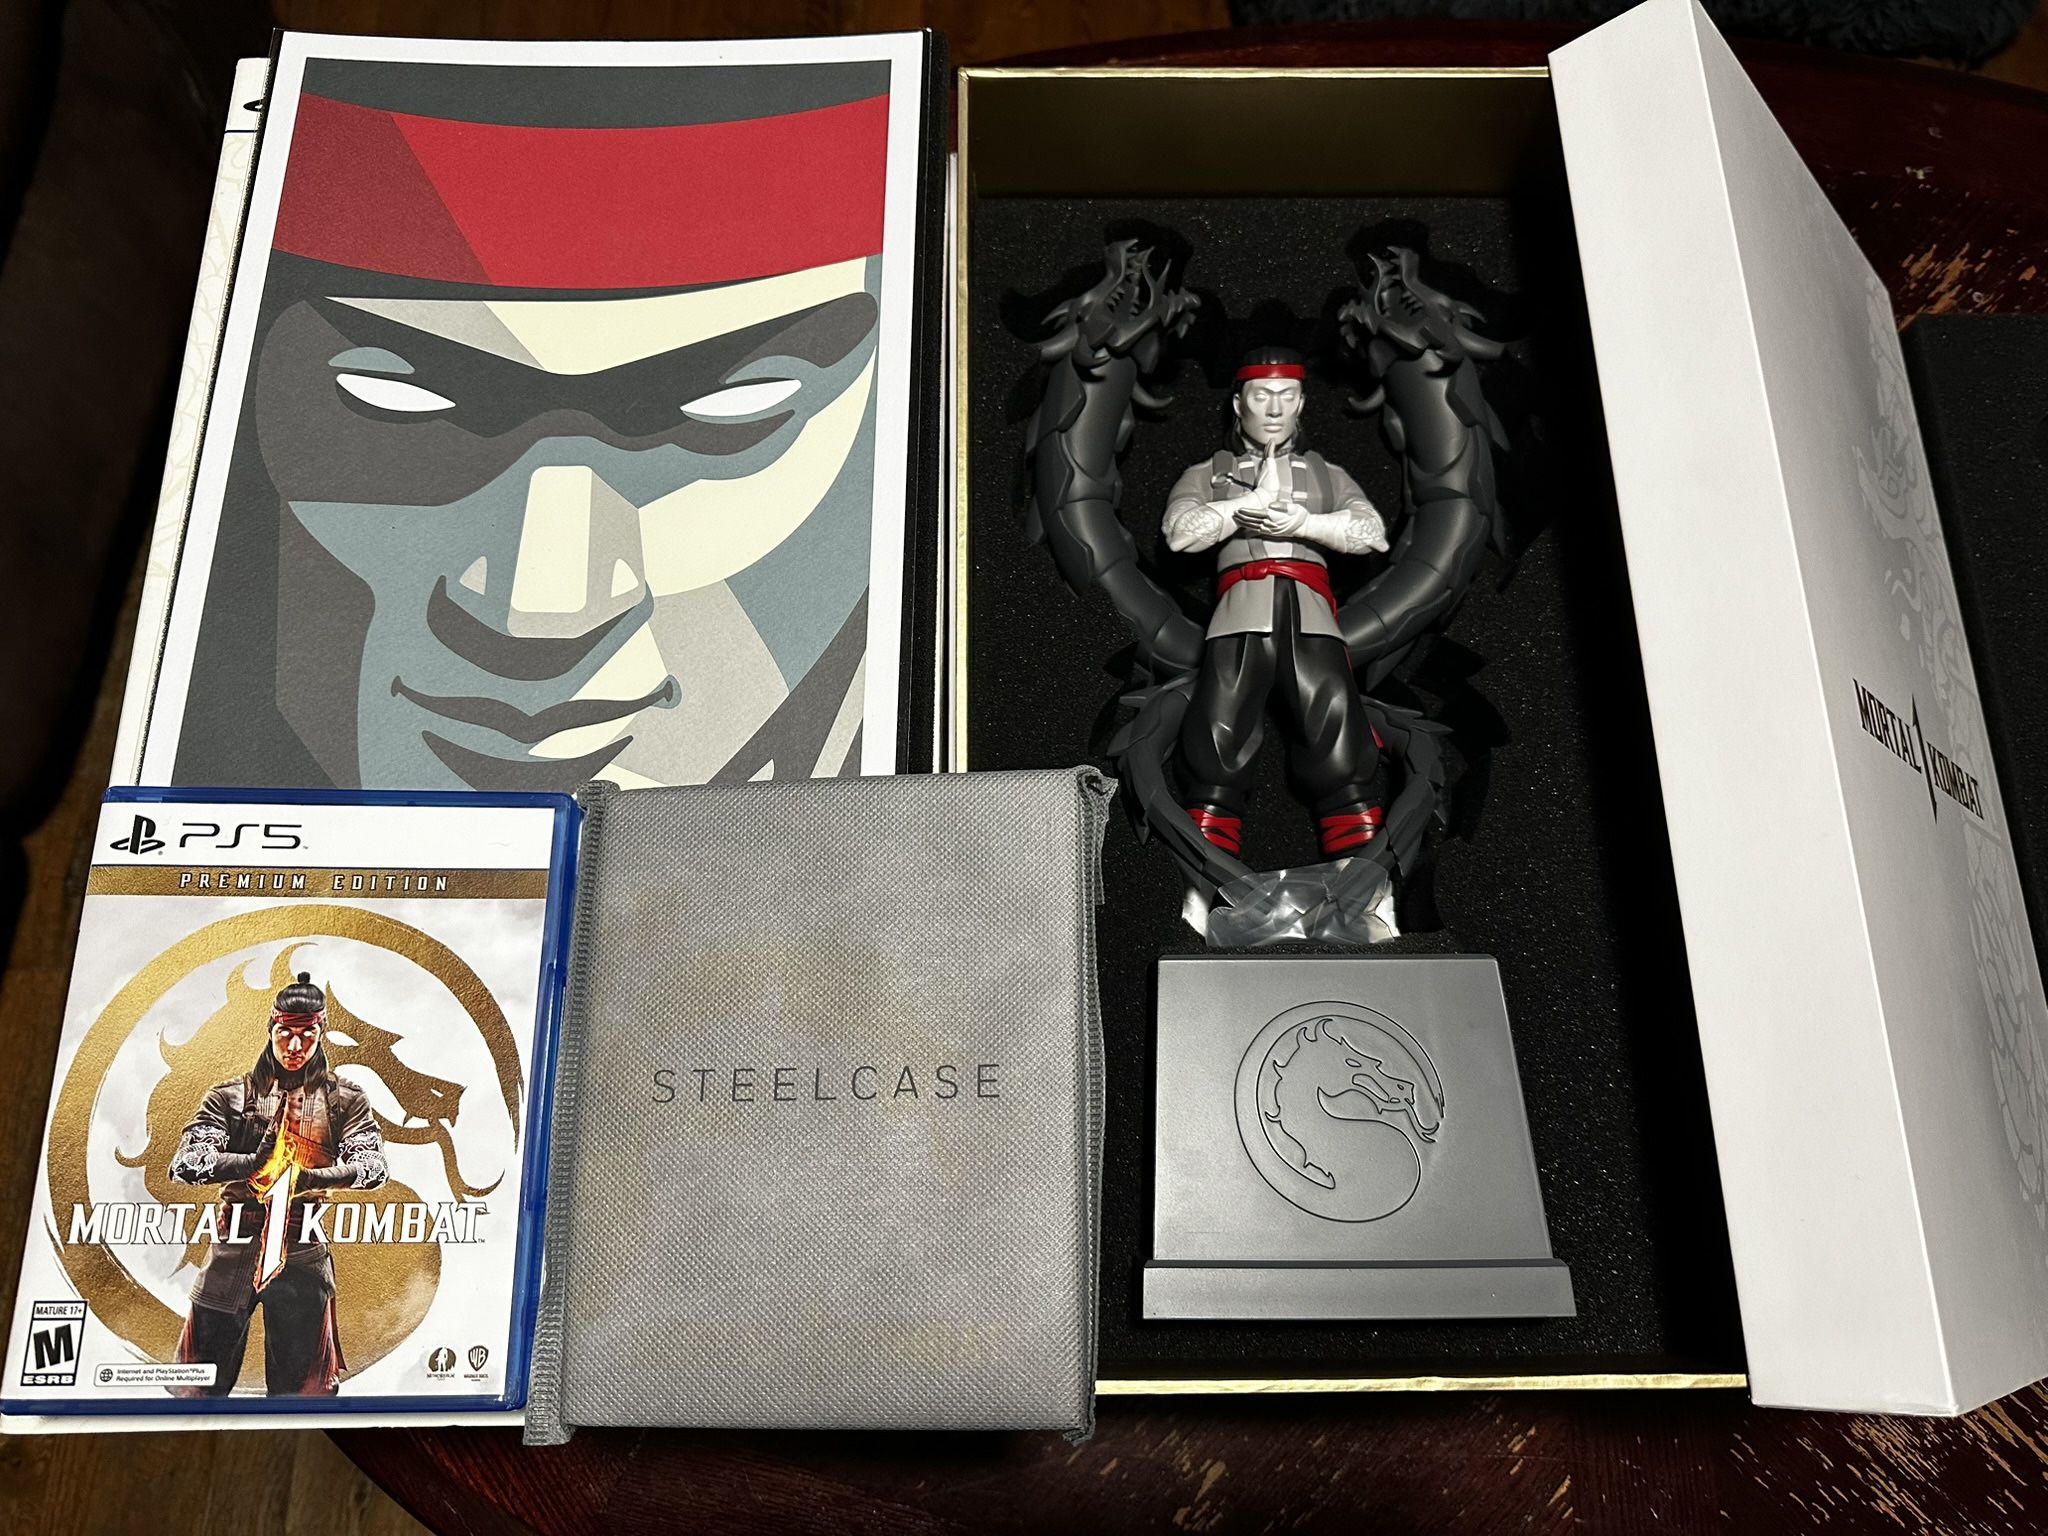 PS5 Mortal Kombat 1 Kollector’s Edition Game DLC Steel Book Case Artwork & Statue Collectors Edition